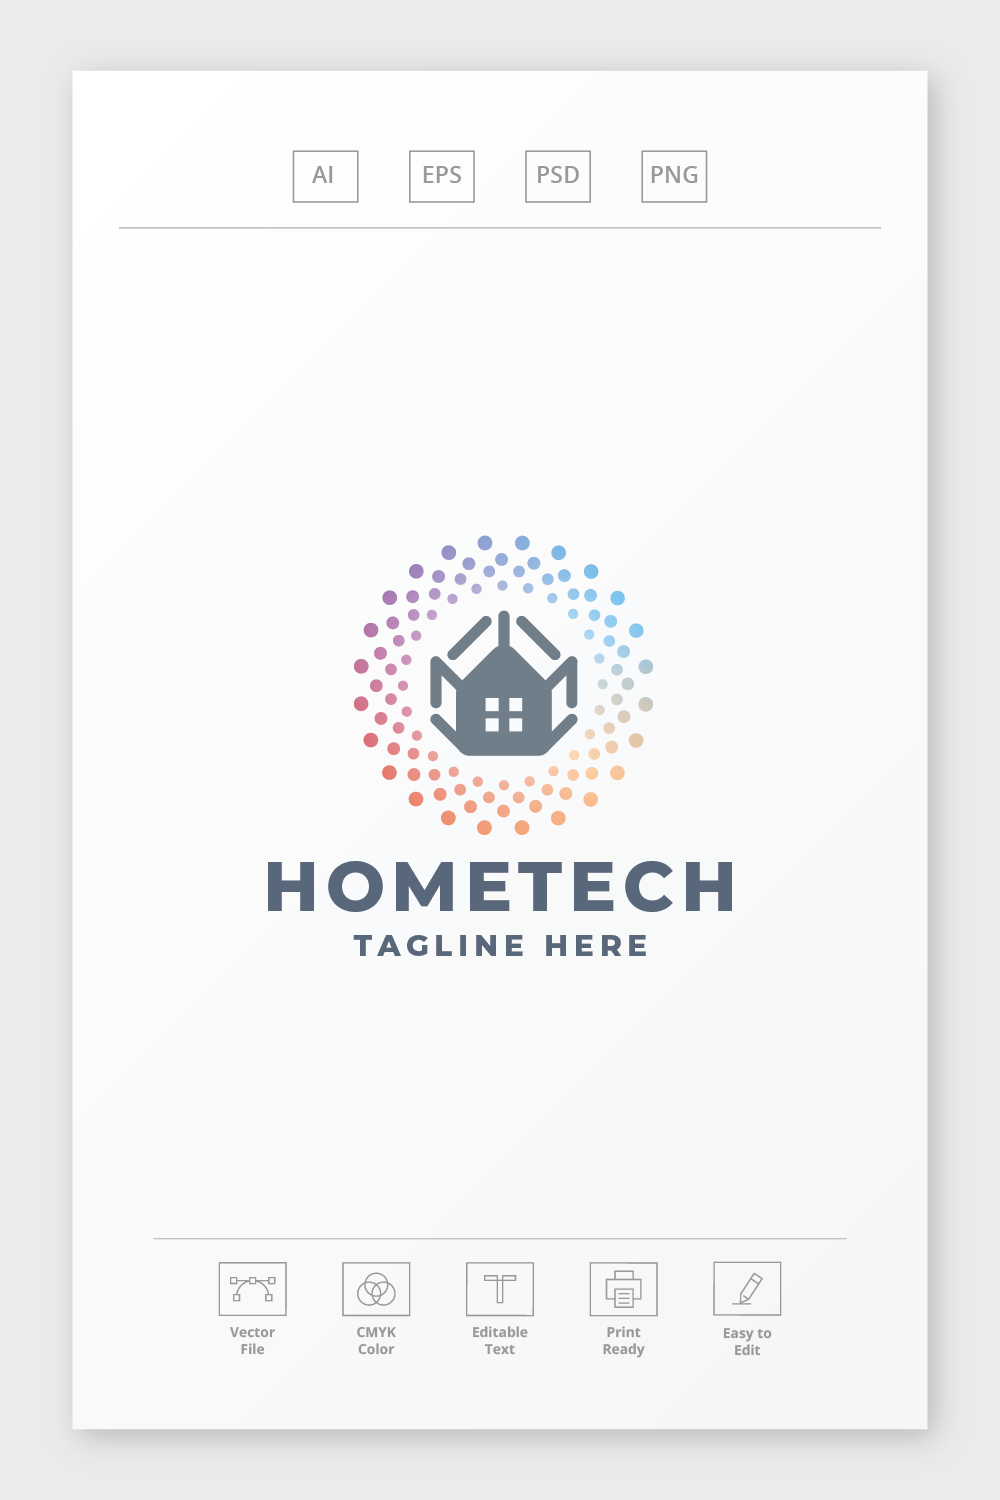 Home Tech Logo pinterest preview image.